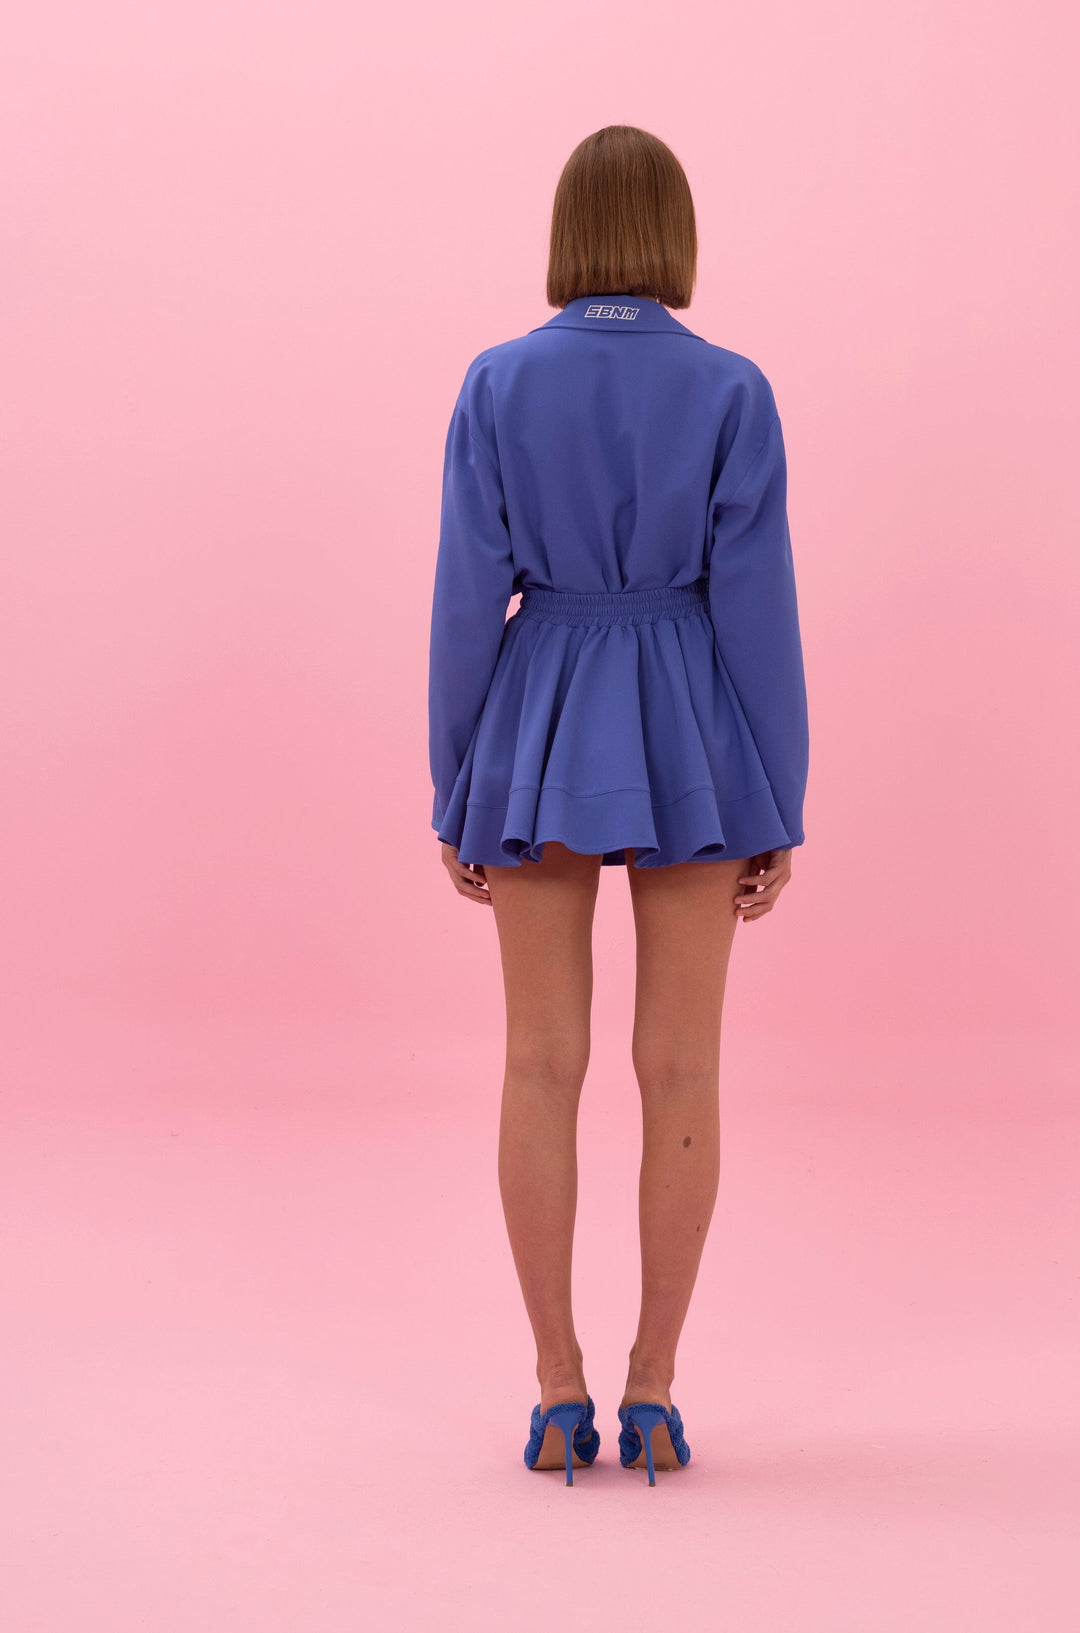 Malibu Barbie Blue Skirt